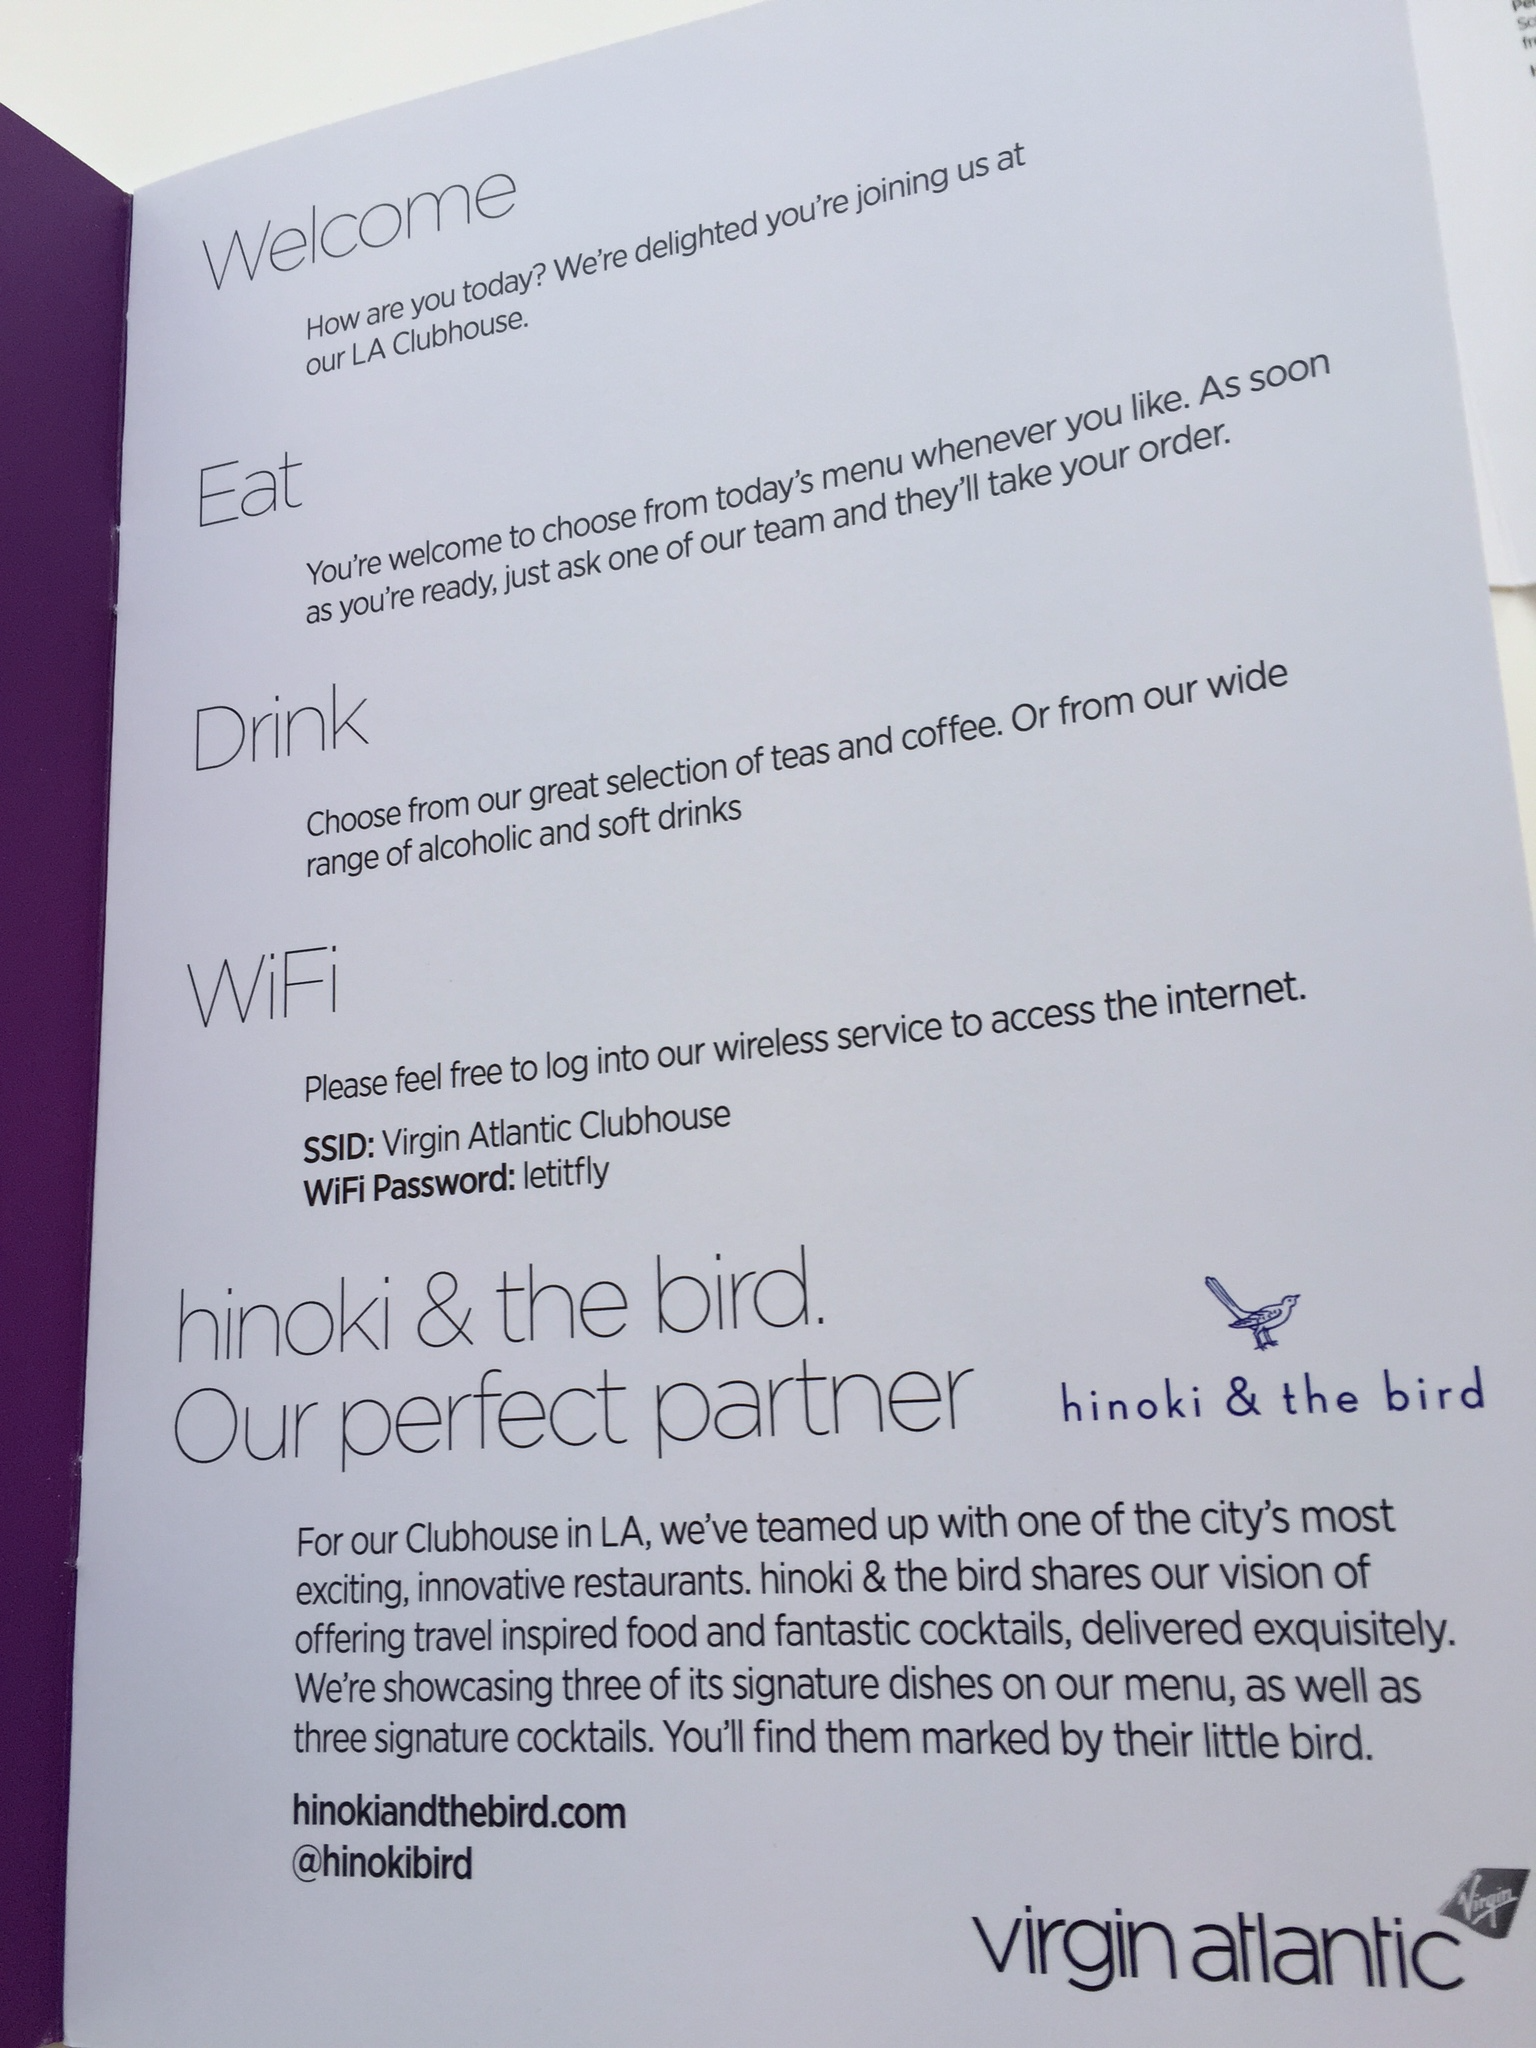 Virgin Atlantic Clubhouse LAX menu introduction